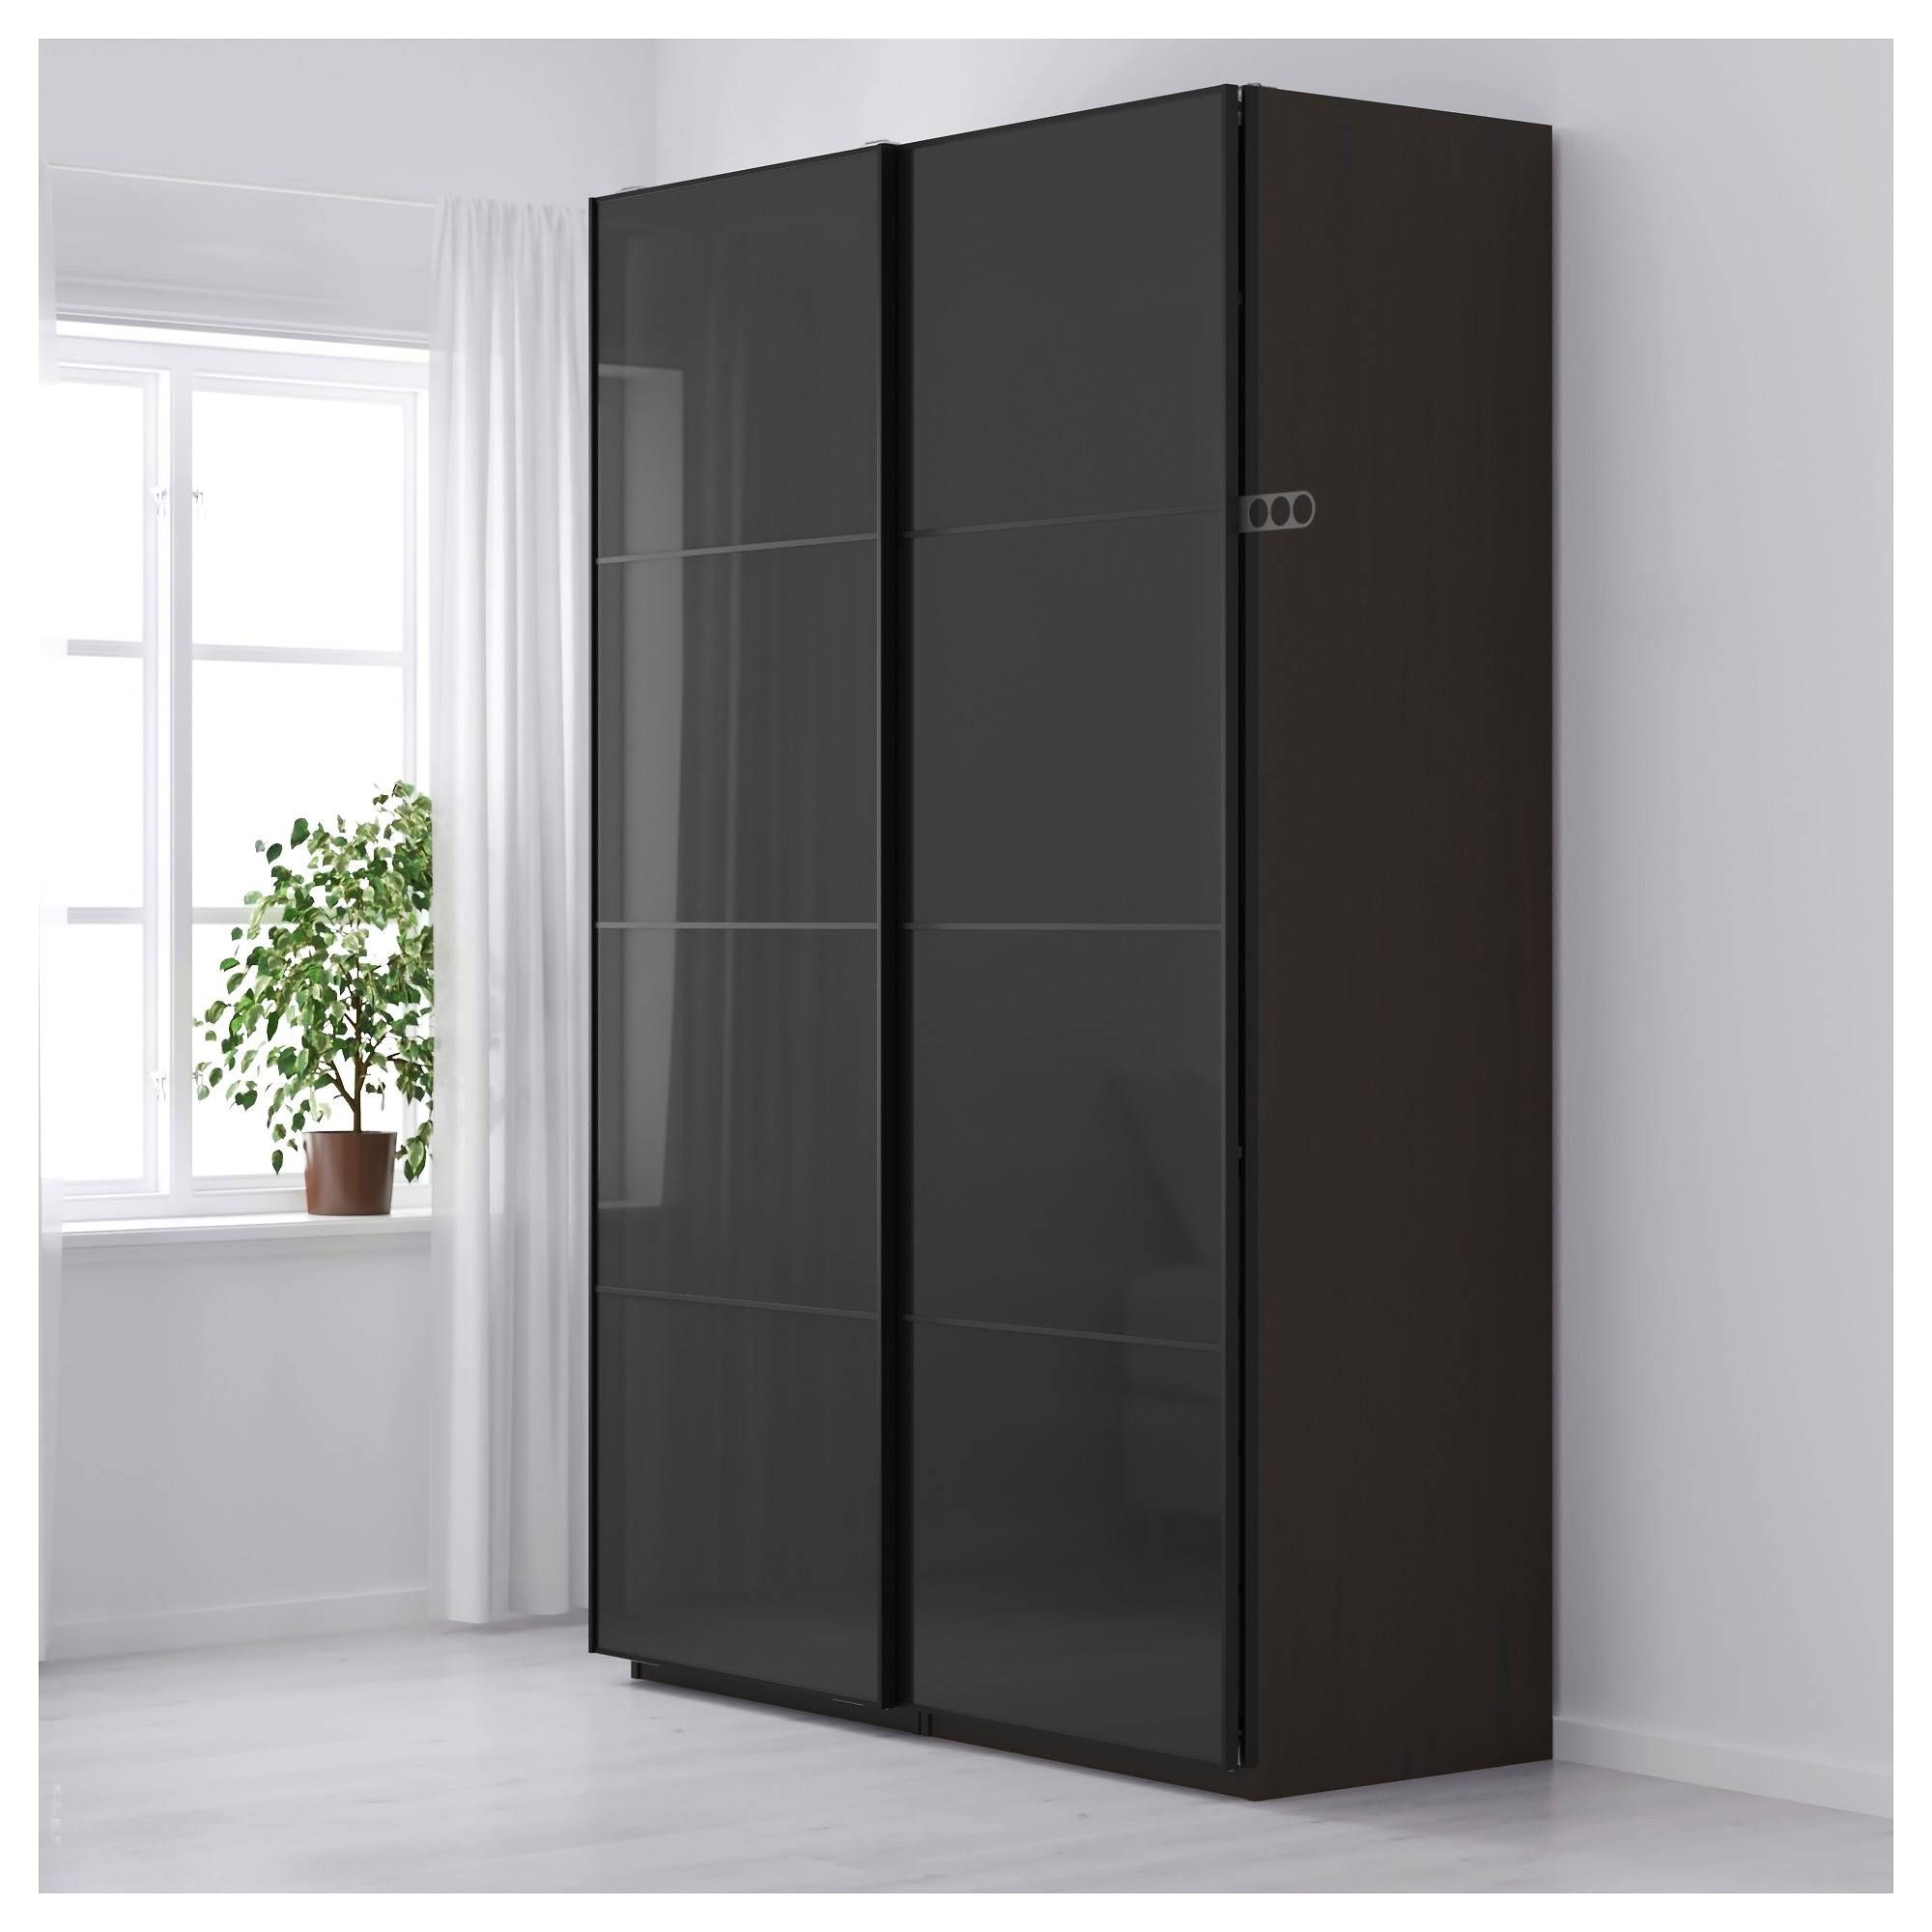 Pax Wardrobe Black Brown/uggdal Grey Glass 150x66x236 Cm – Ikea With Black Glass Wardrobes (View 3 of 15)